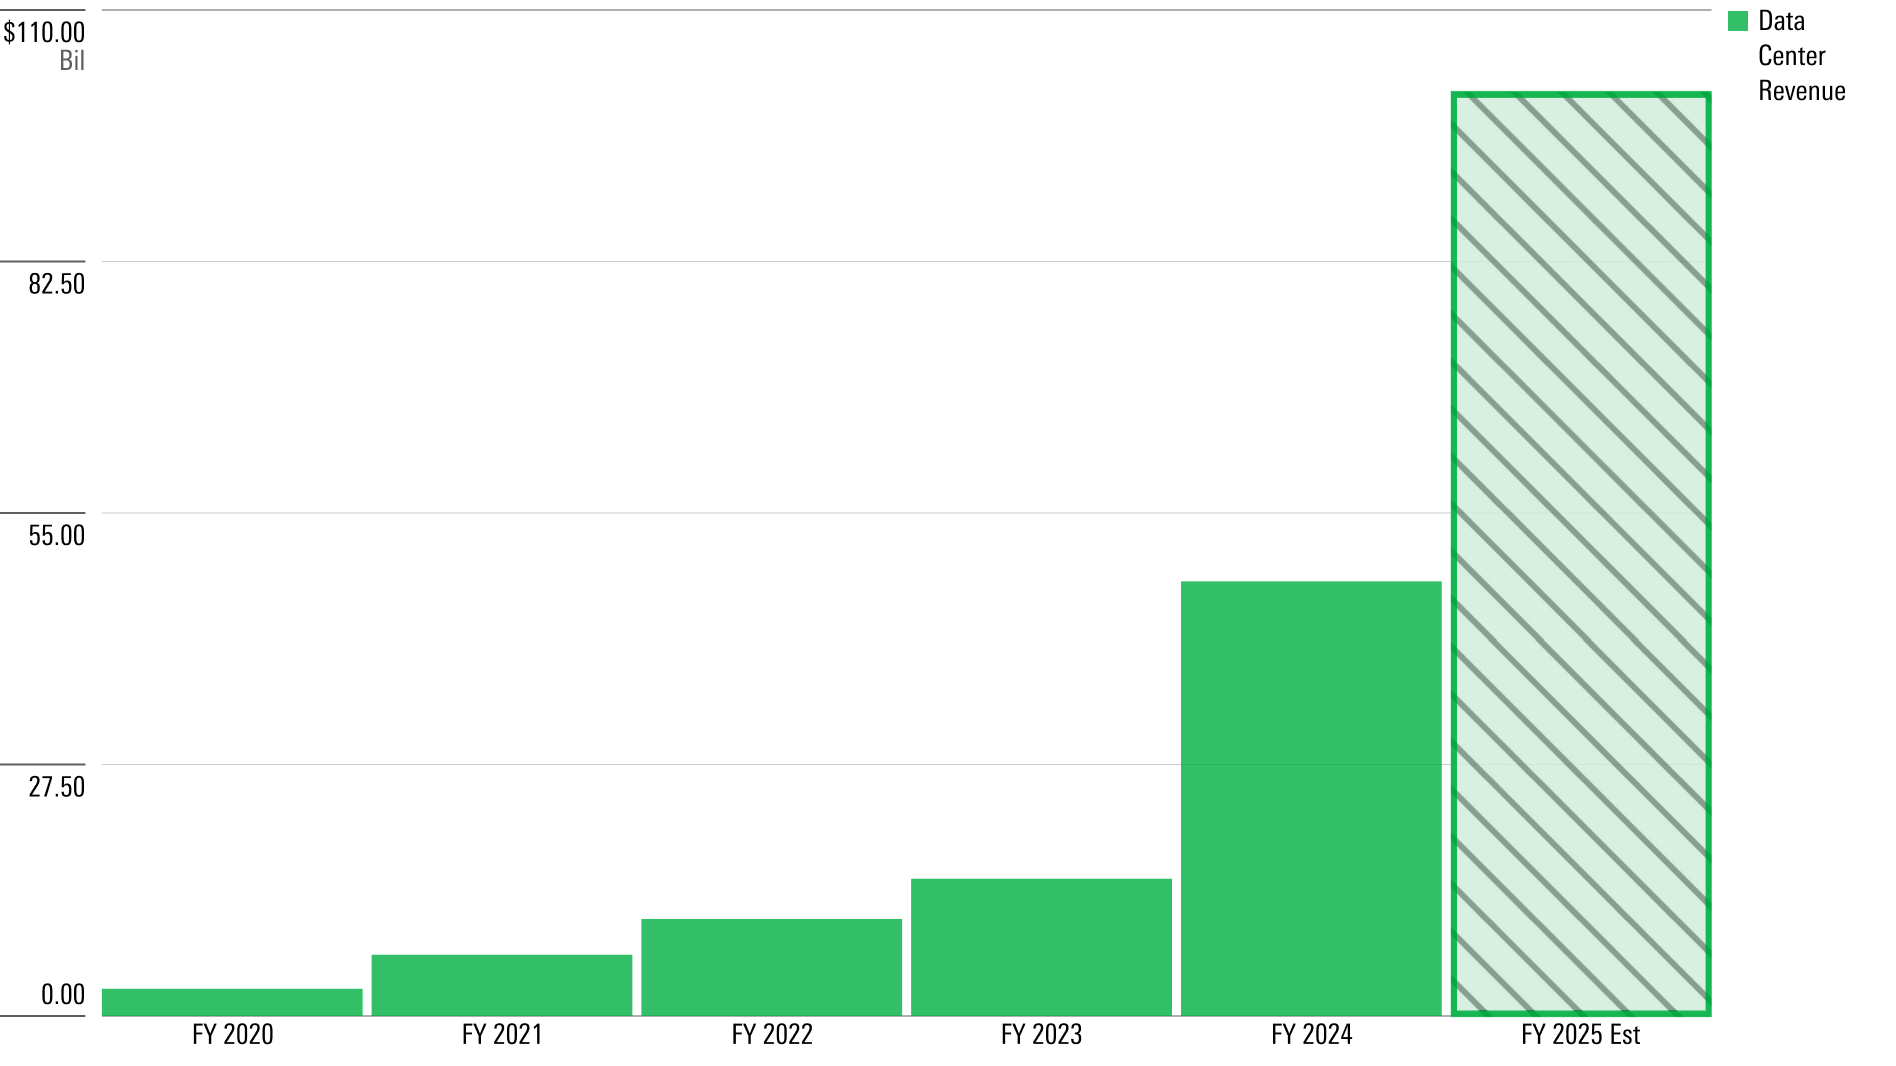 Bar chart showing Nvidia's data center revenue.